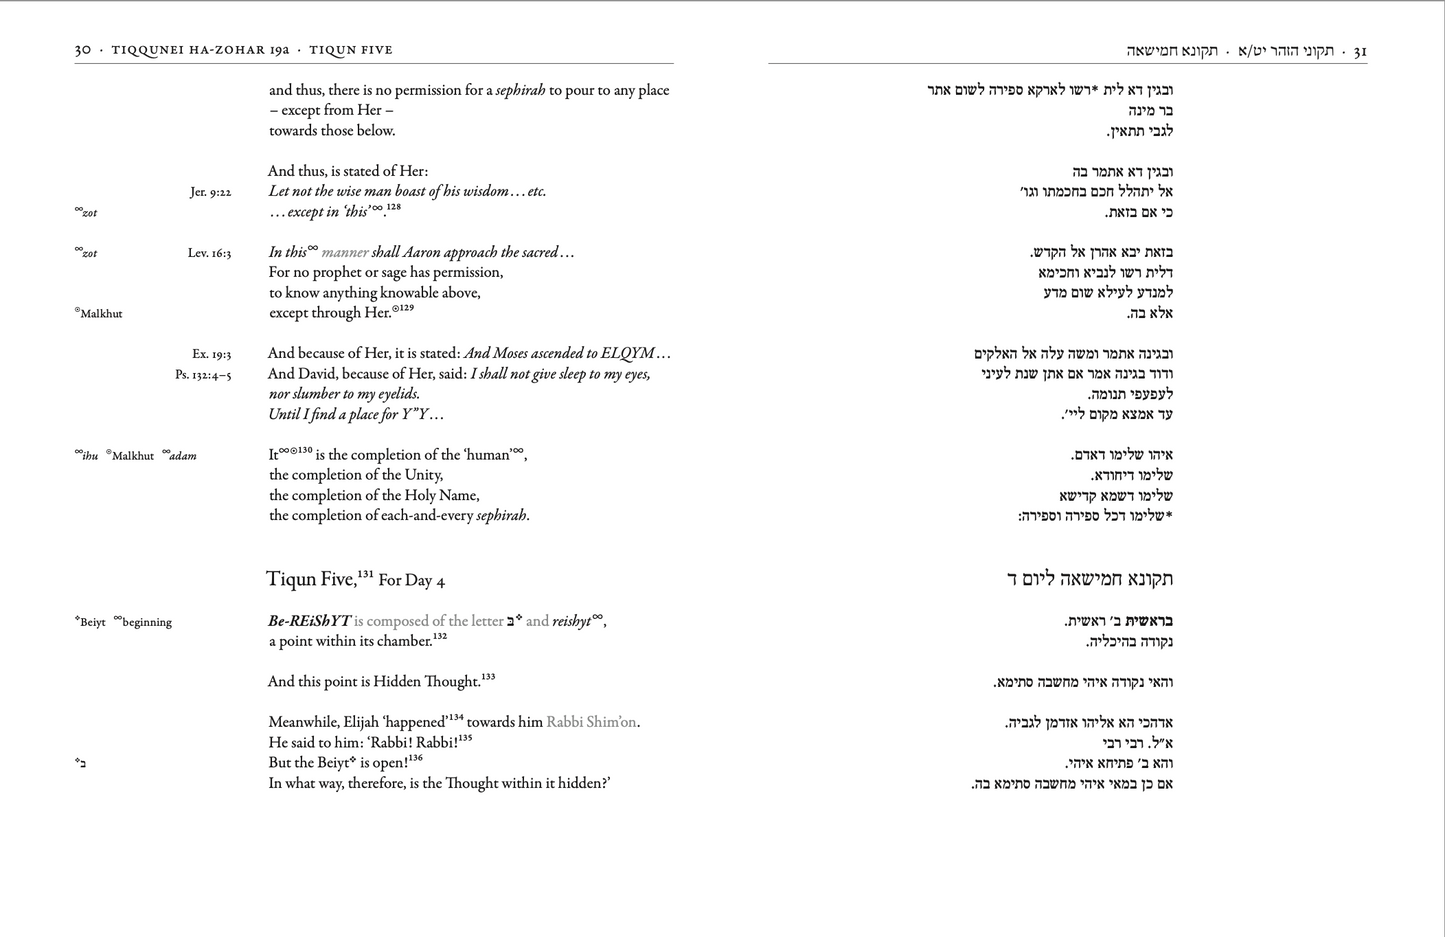 Tikkunei haZohar - Tiqun Four (English translation from bilingual page spread taken from Tiqqunei ha-Zohar Margalya)